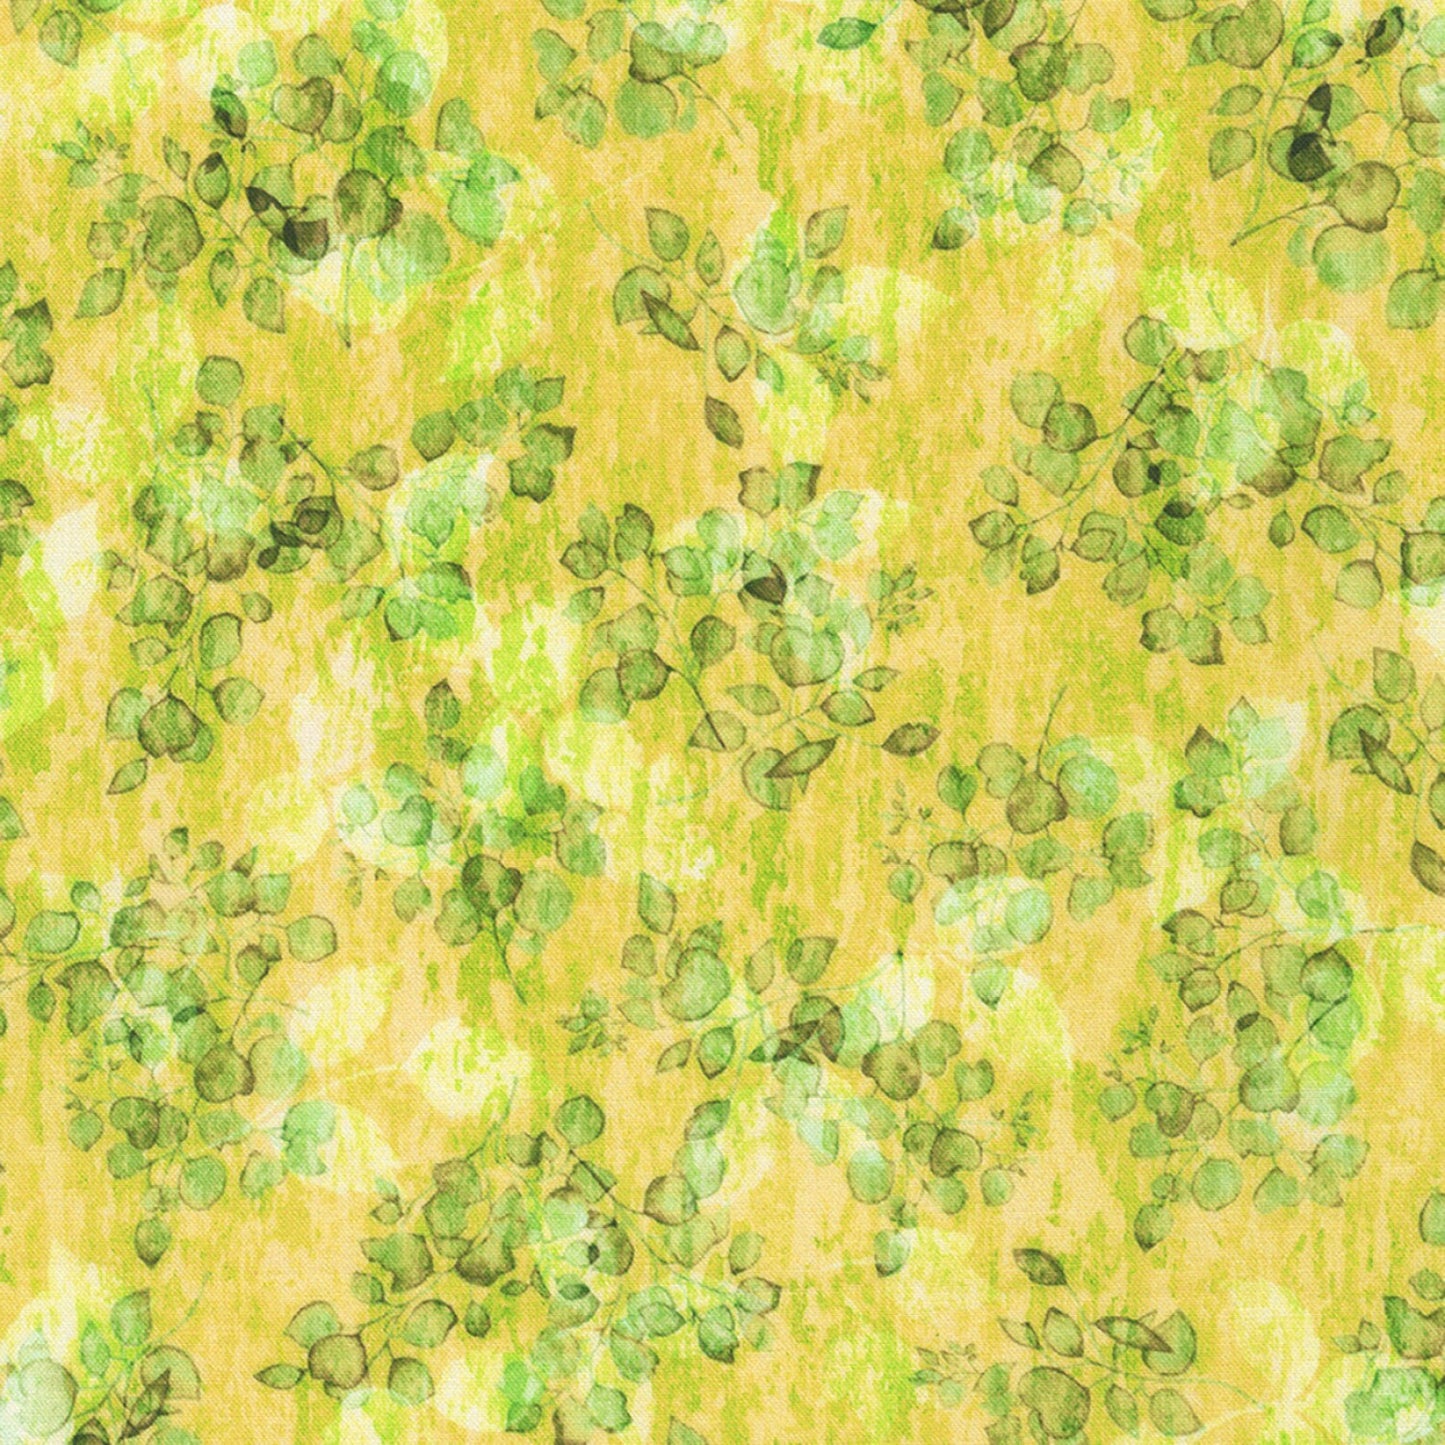 Sienna Charm Squares, Robert Kaufman CHS-1144-42, Rainbow Colors Leaves Foliage Nature Charm Pack Fabric, 5" Inch Precut Fabric Squares